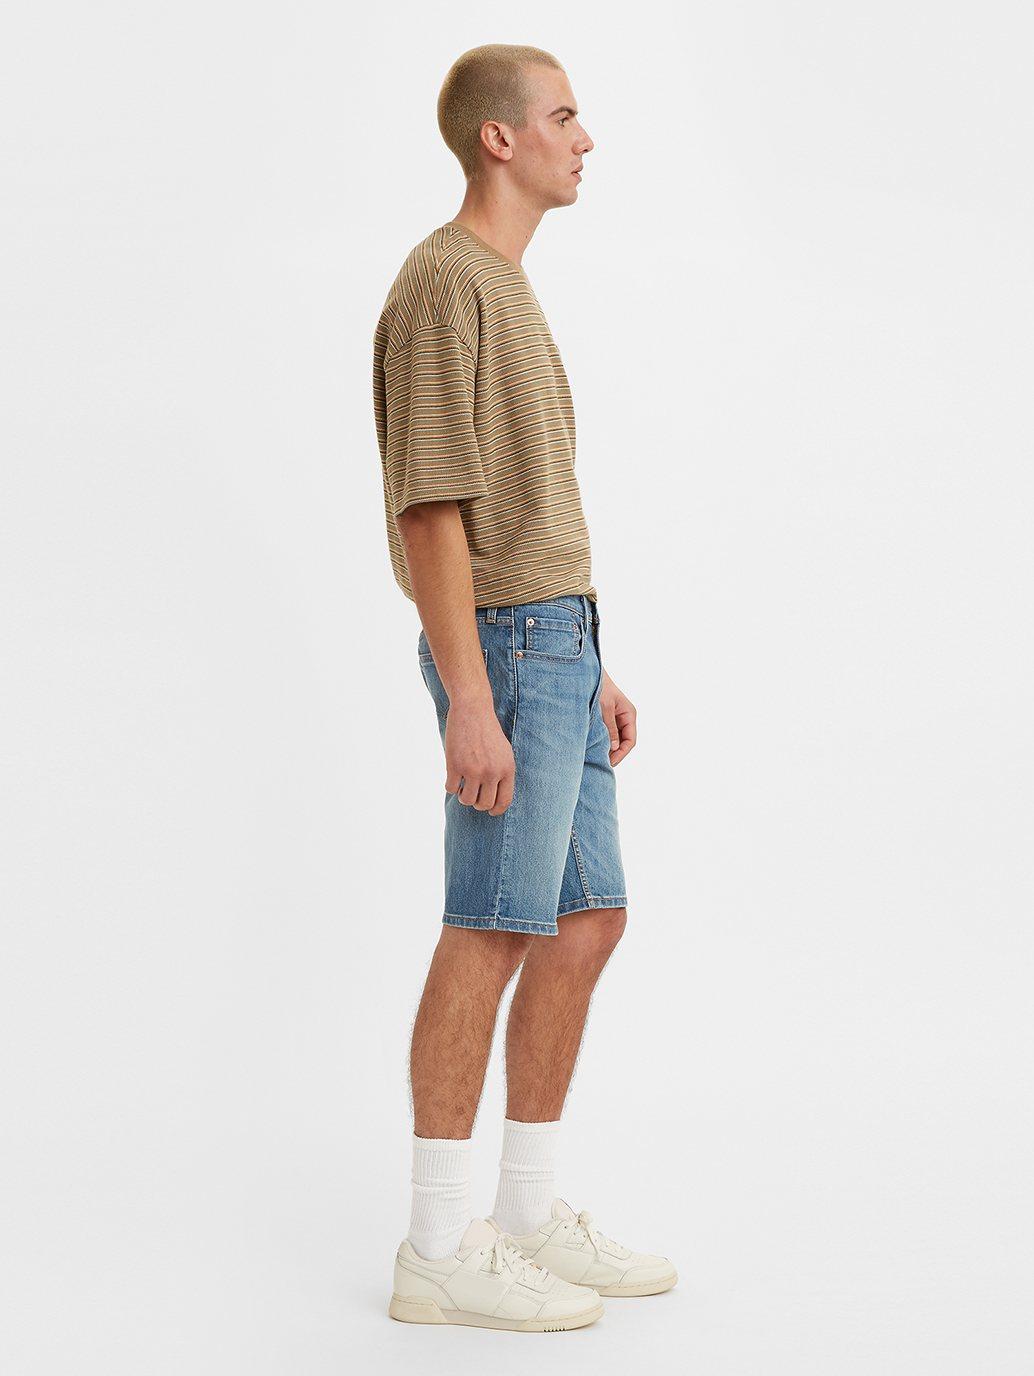 levis singapore mens standard jean shorts 398640067 03 Side